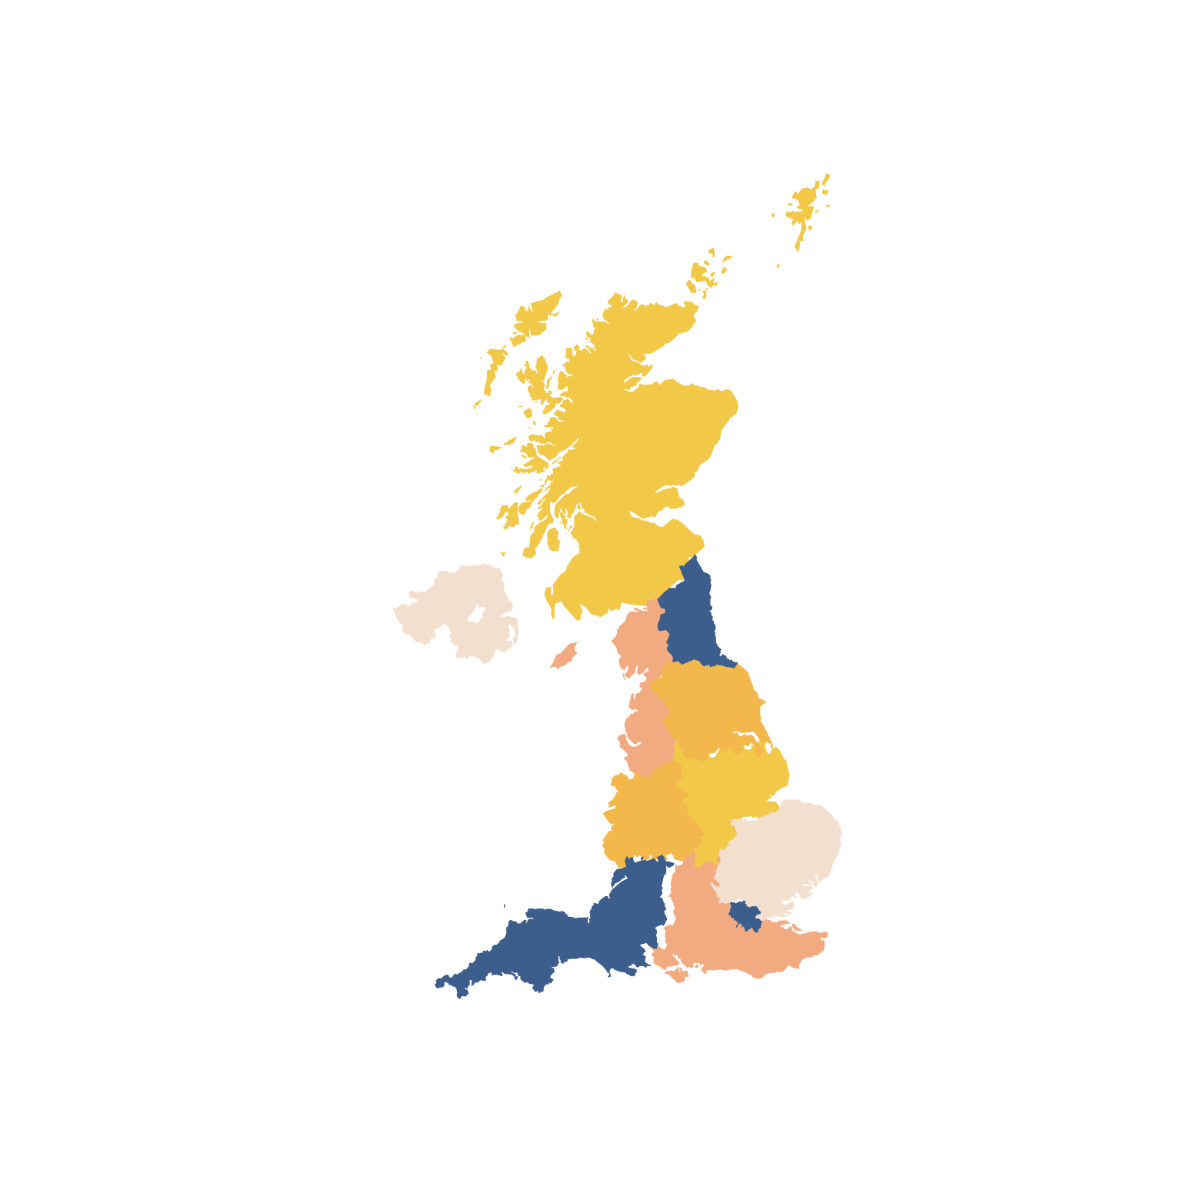 UK Regions Map Vector Template